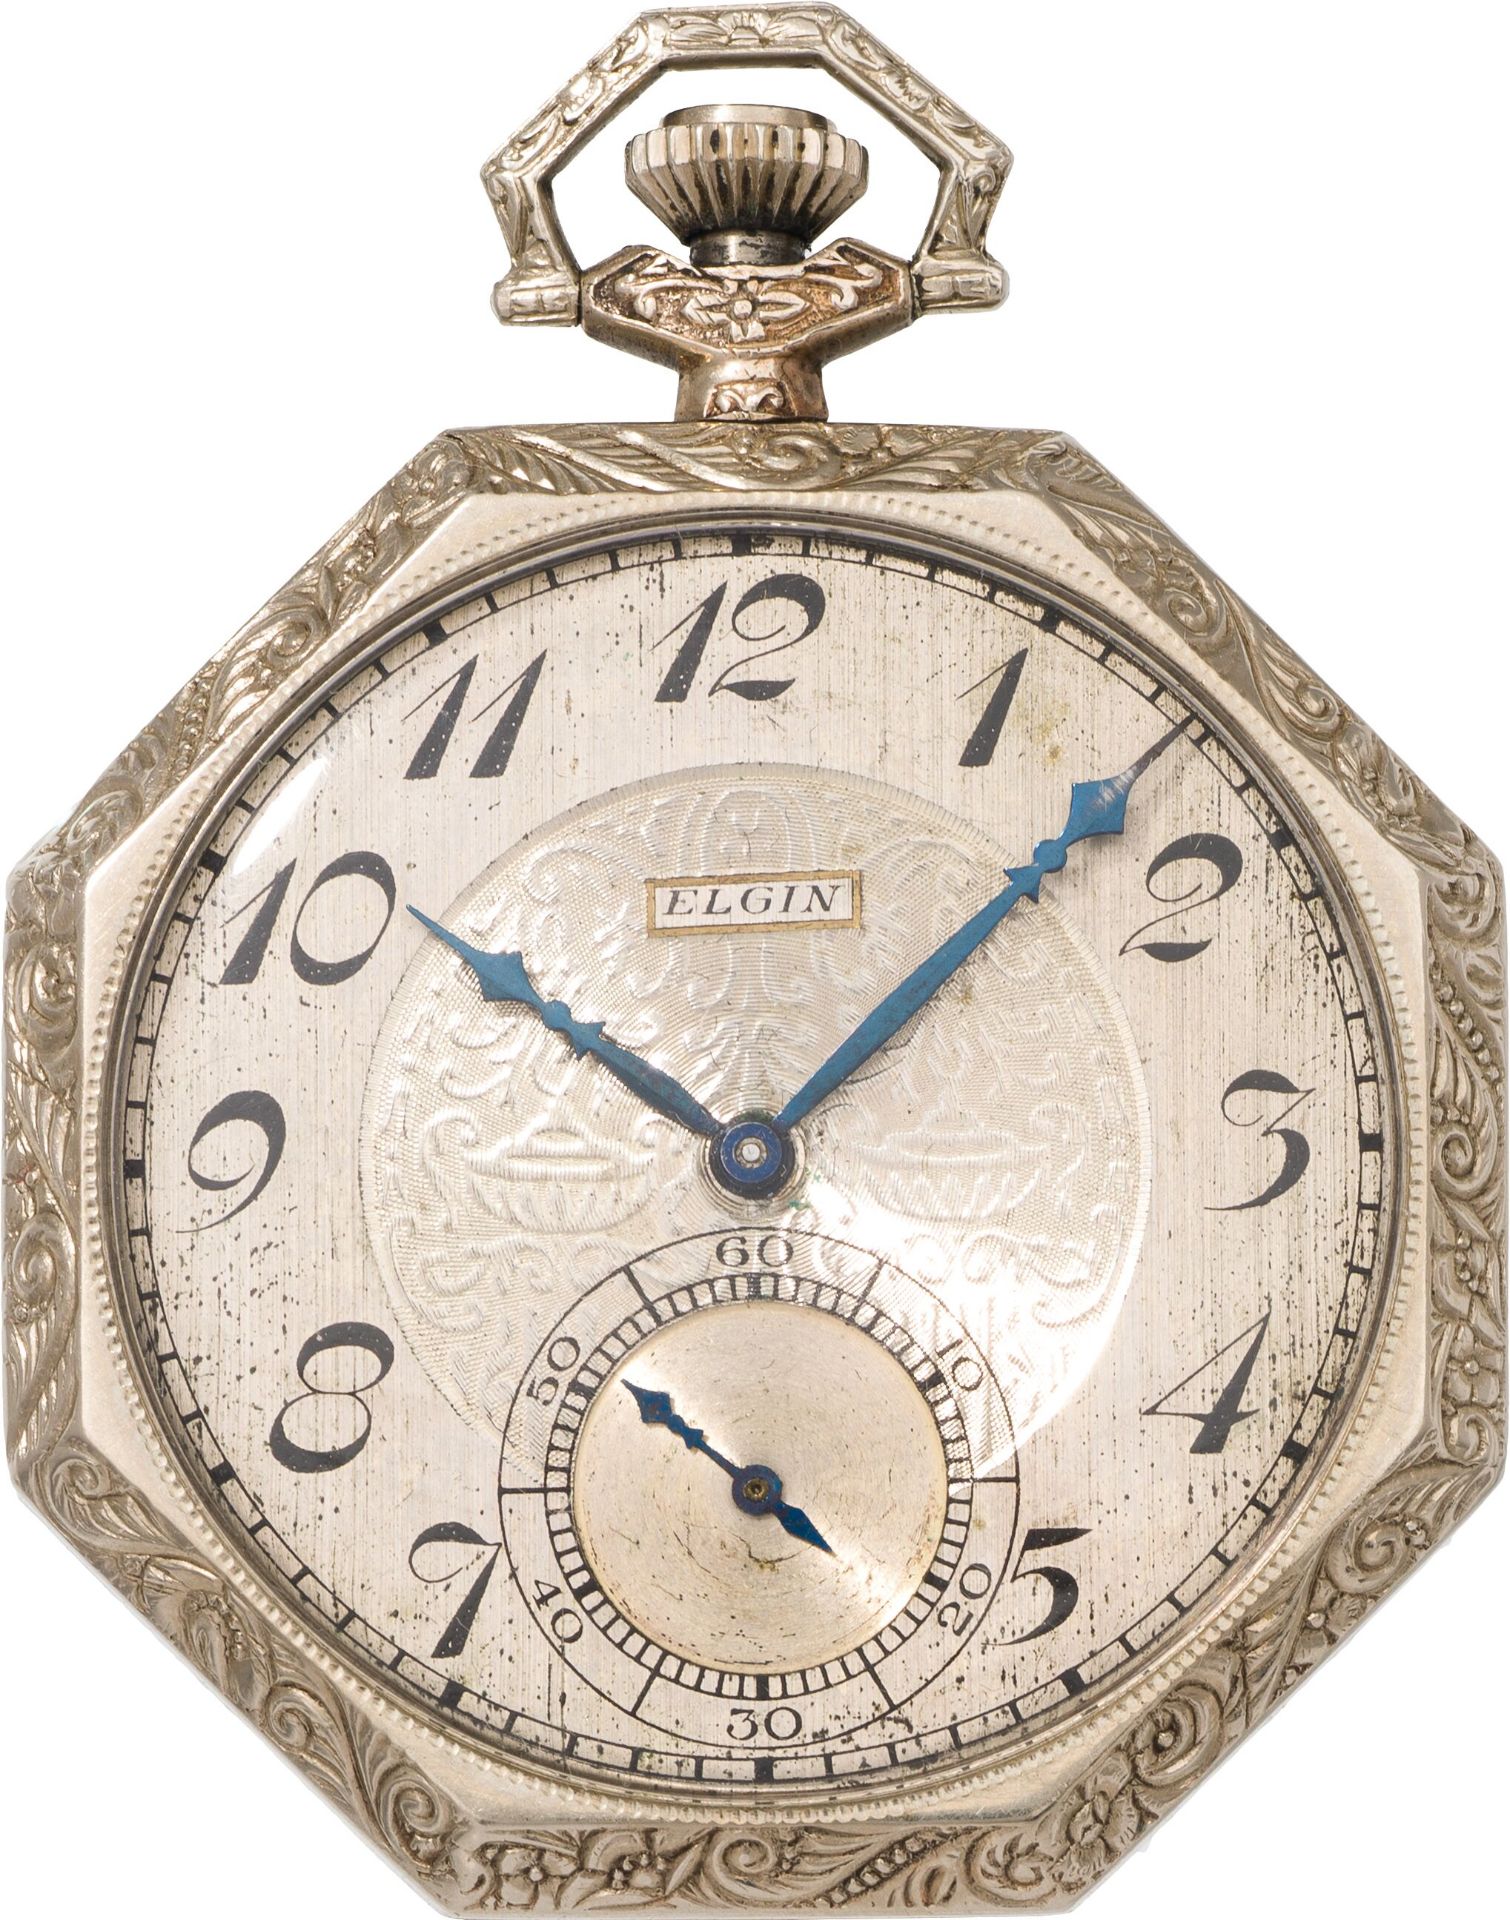 Tailcoat watchElgin National Watch Company, U.S.A., c. 192014k white gold; crown winding